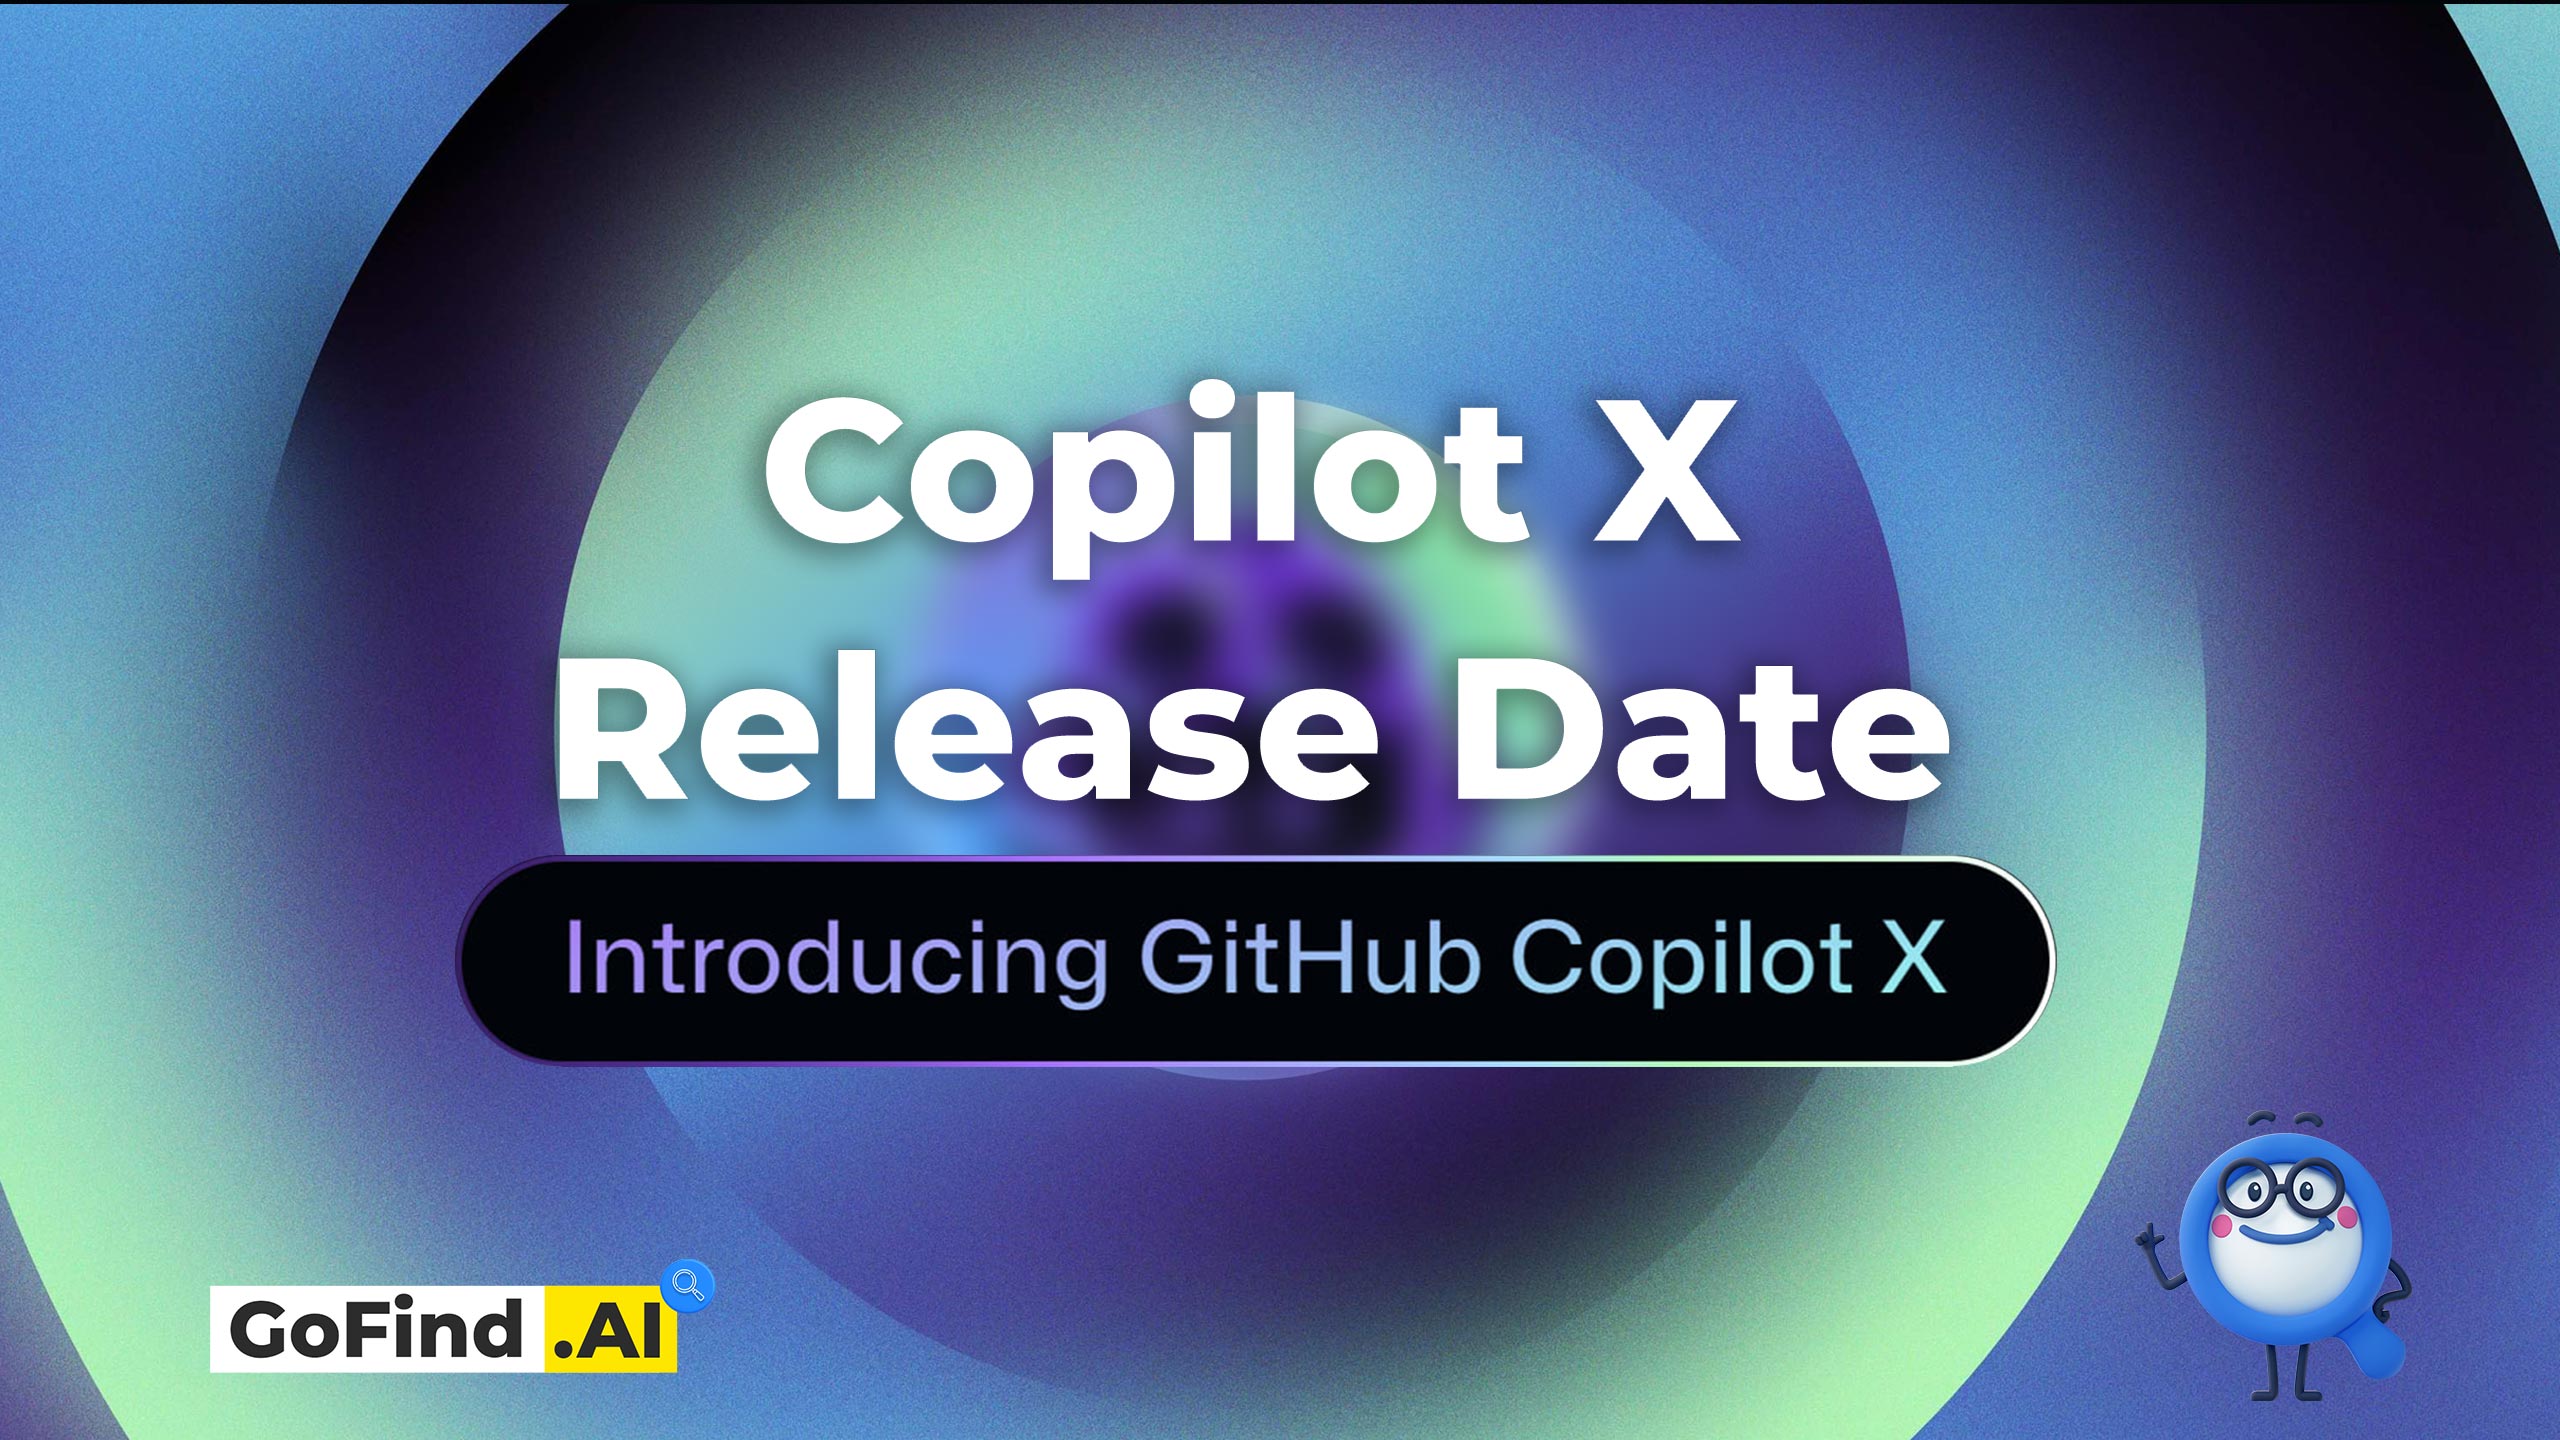 Copilot X Release Date